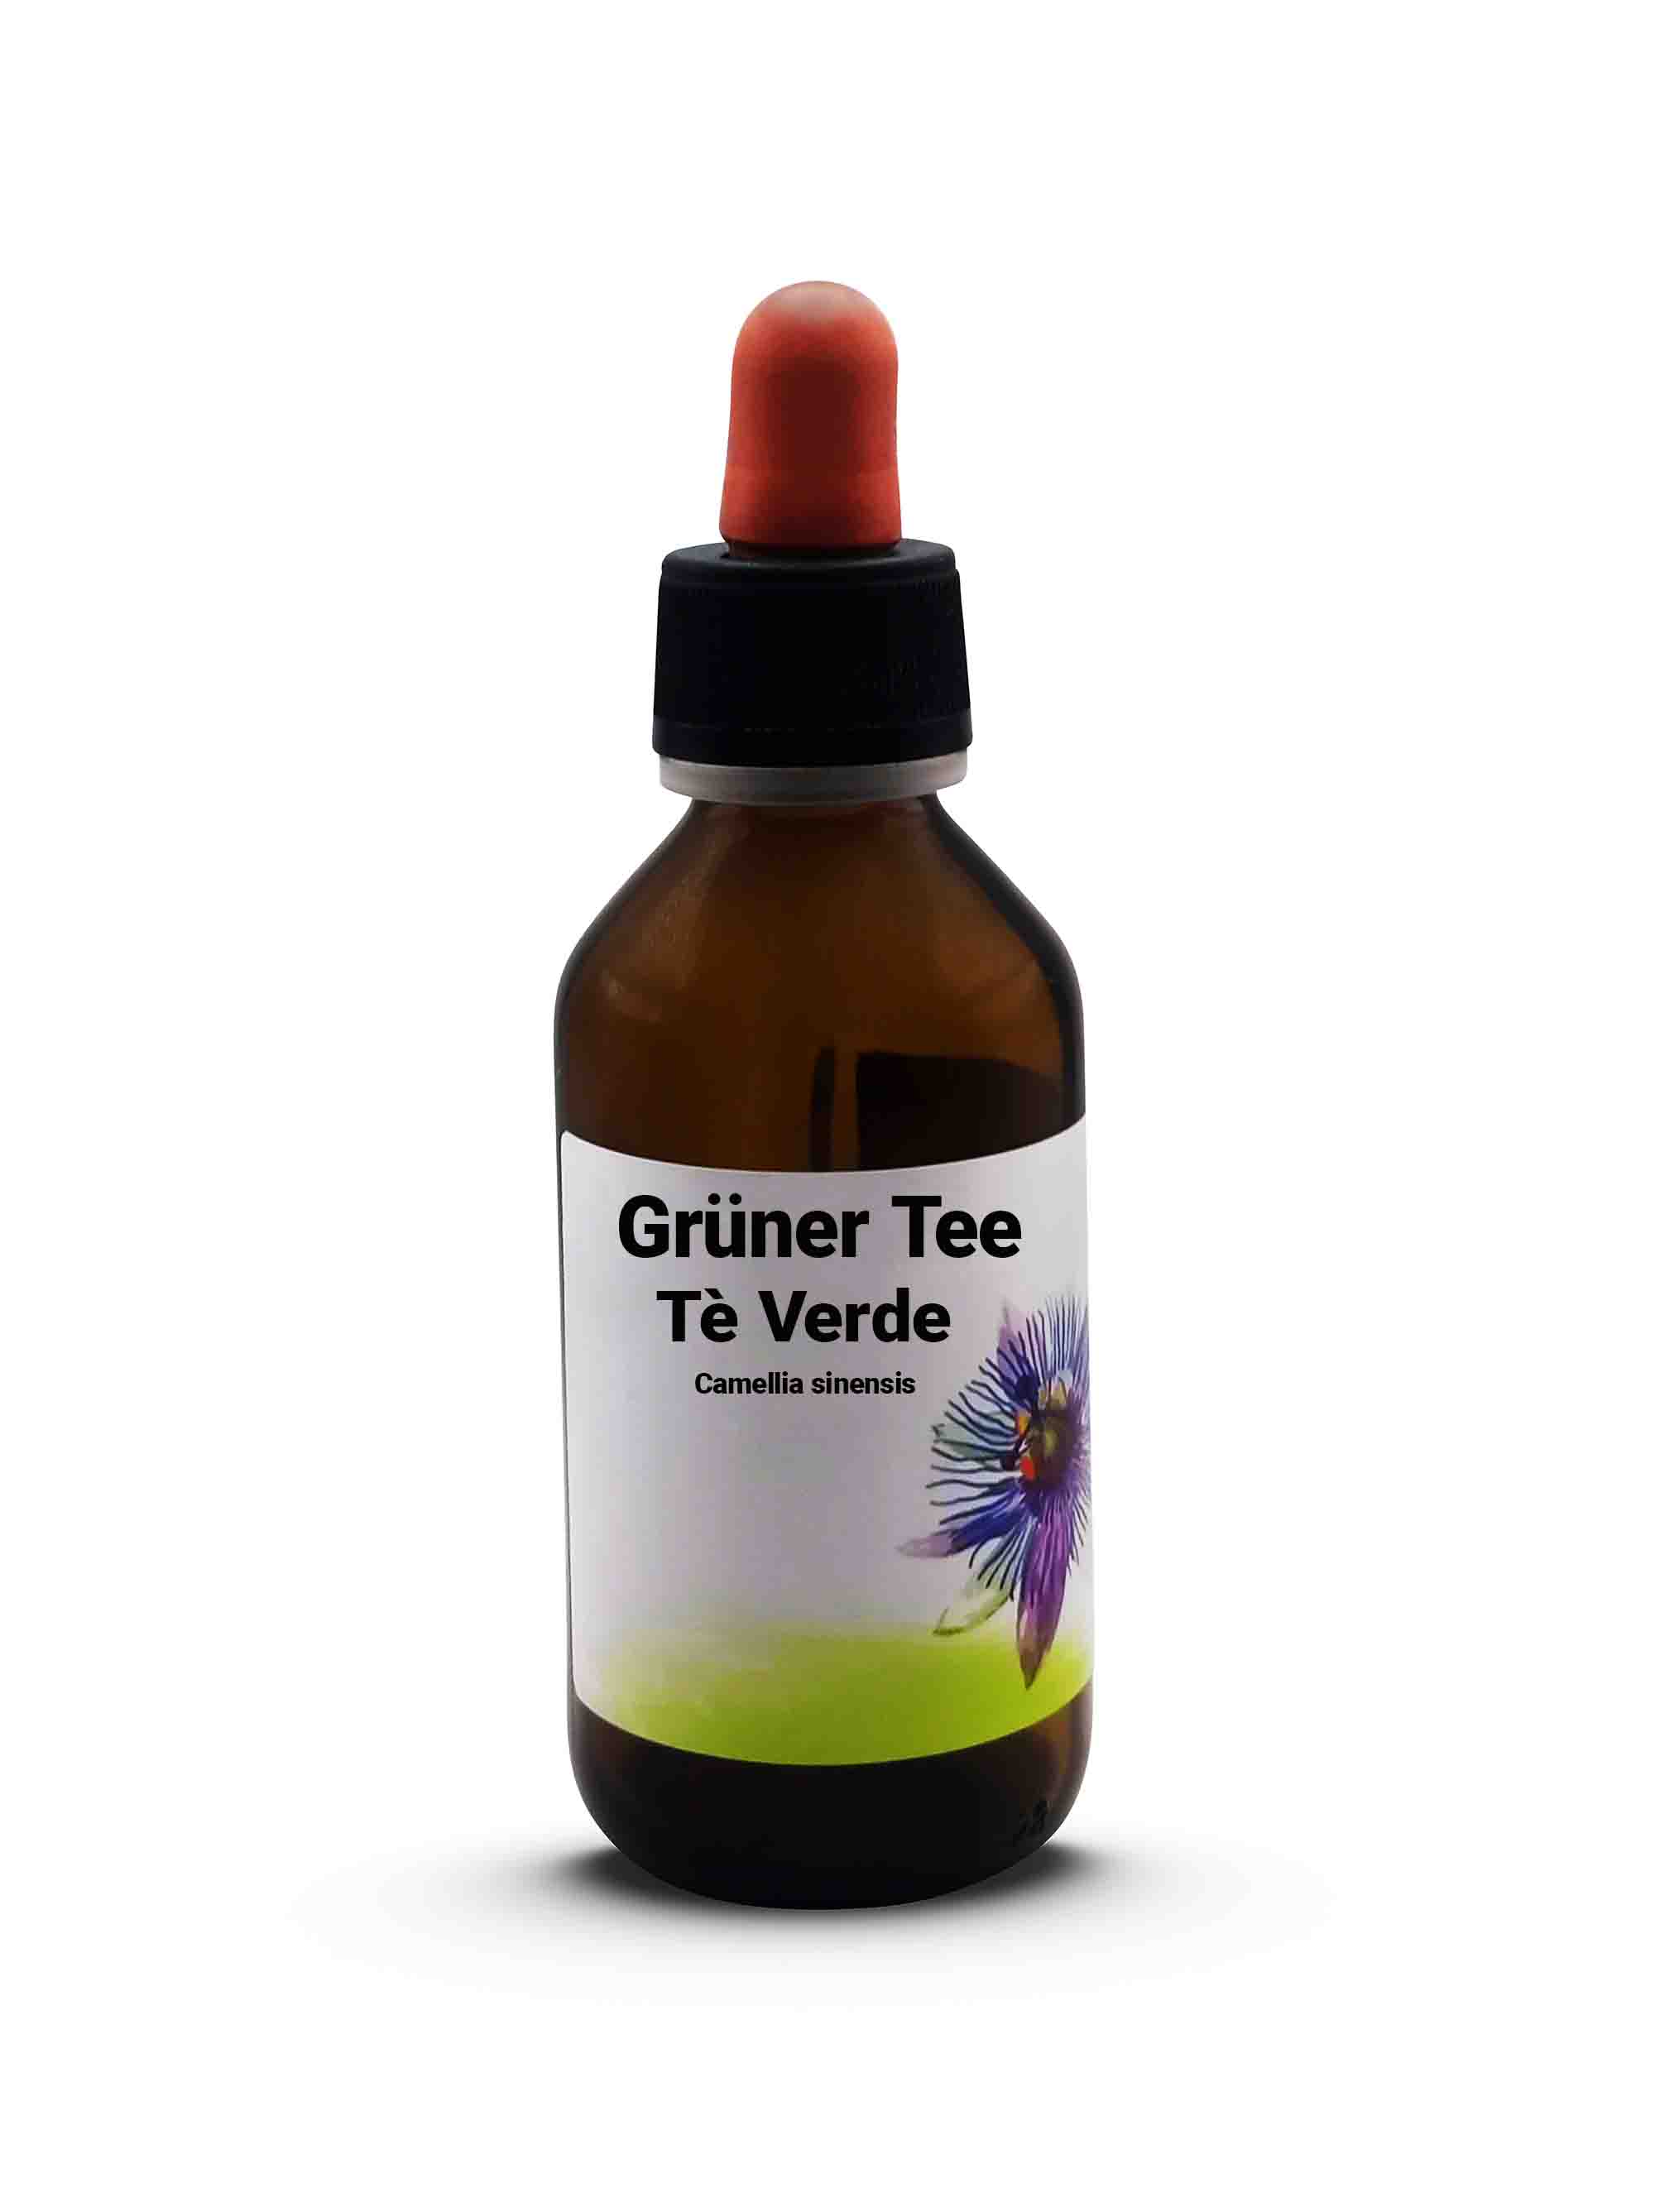 Grüner Tee - Camellia sinensis Tè Verde 100 ml